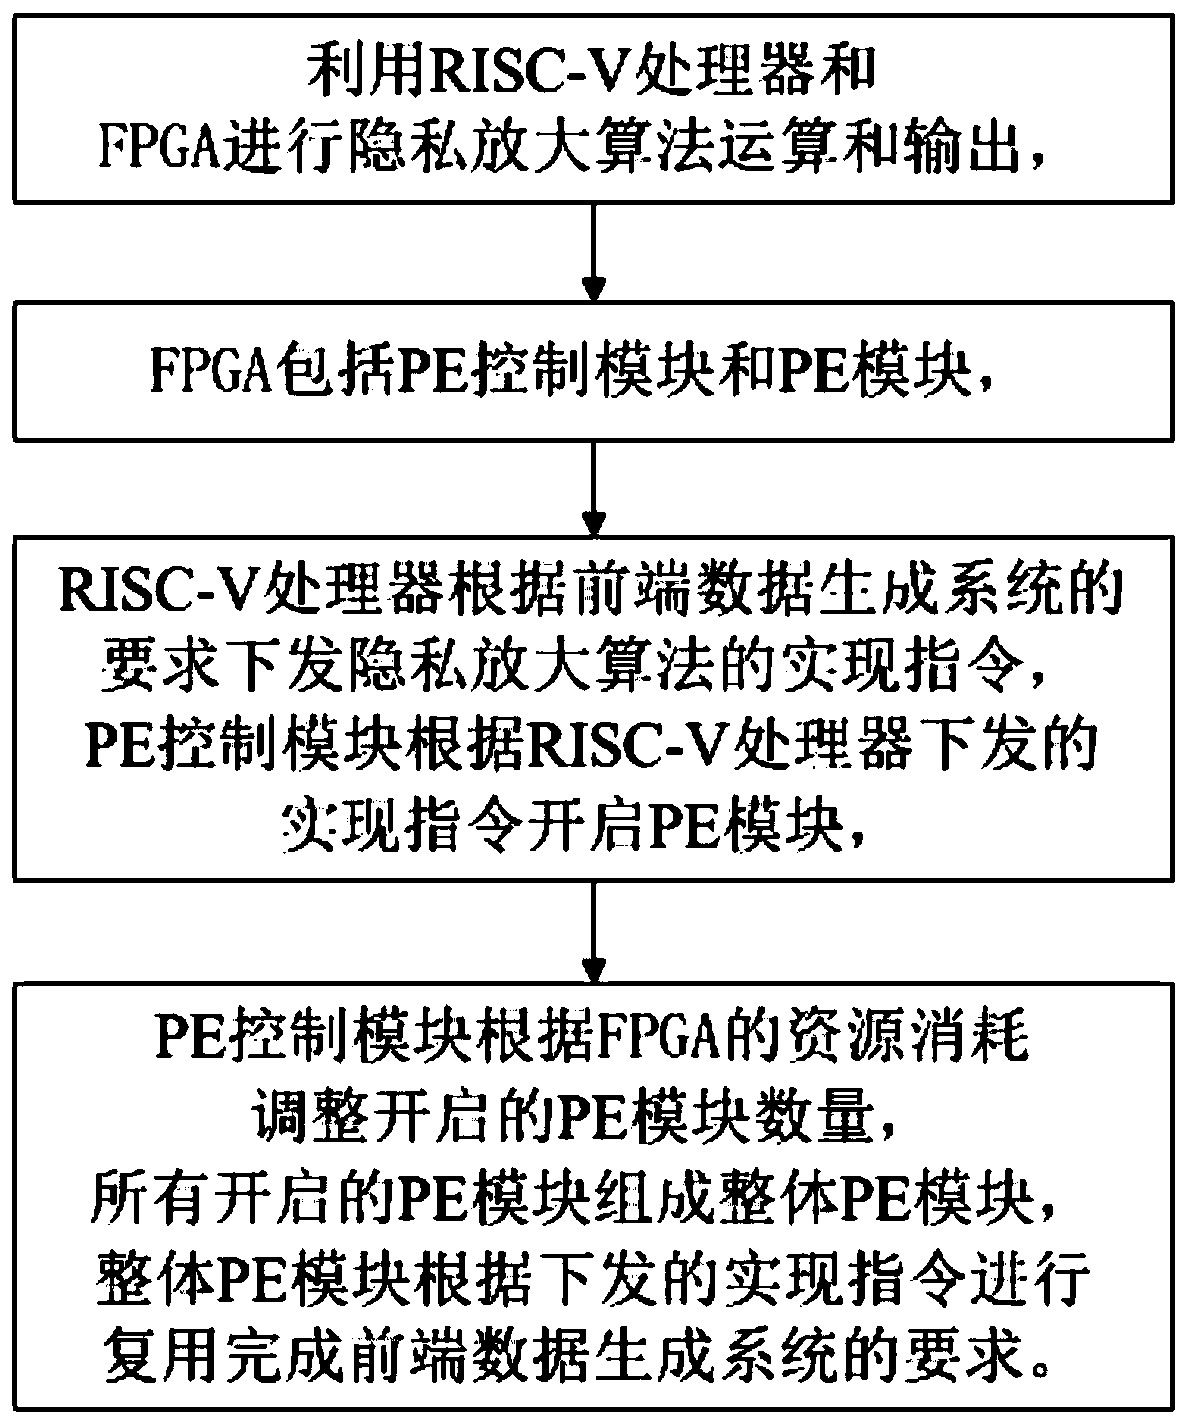 Implementation device of privacy amplification algorithm based on FPGA + RISC-V